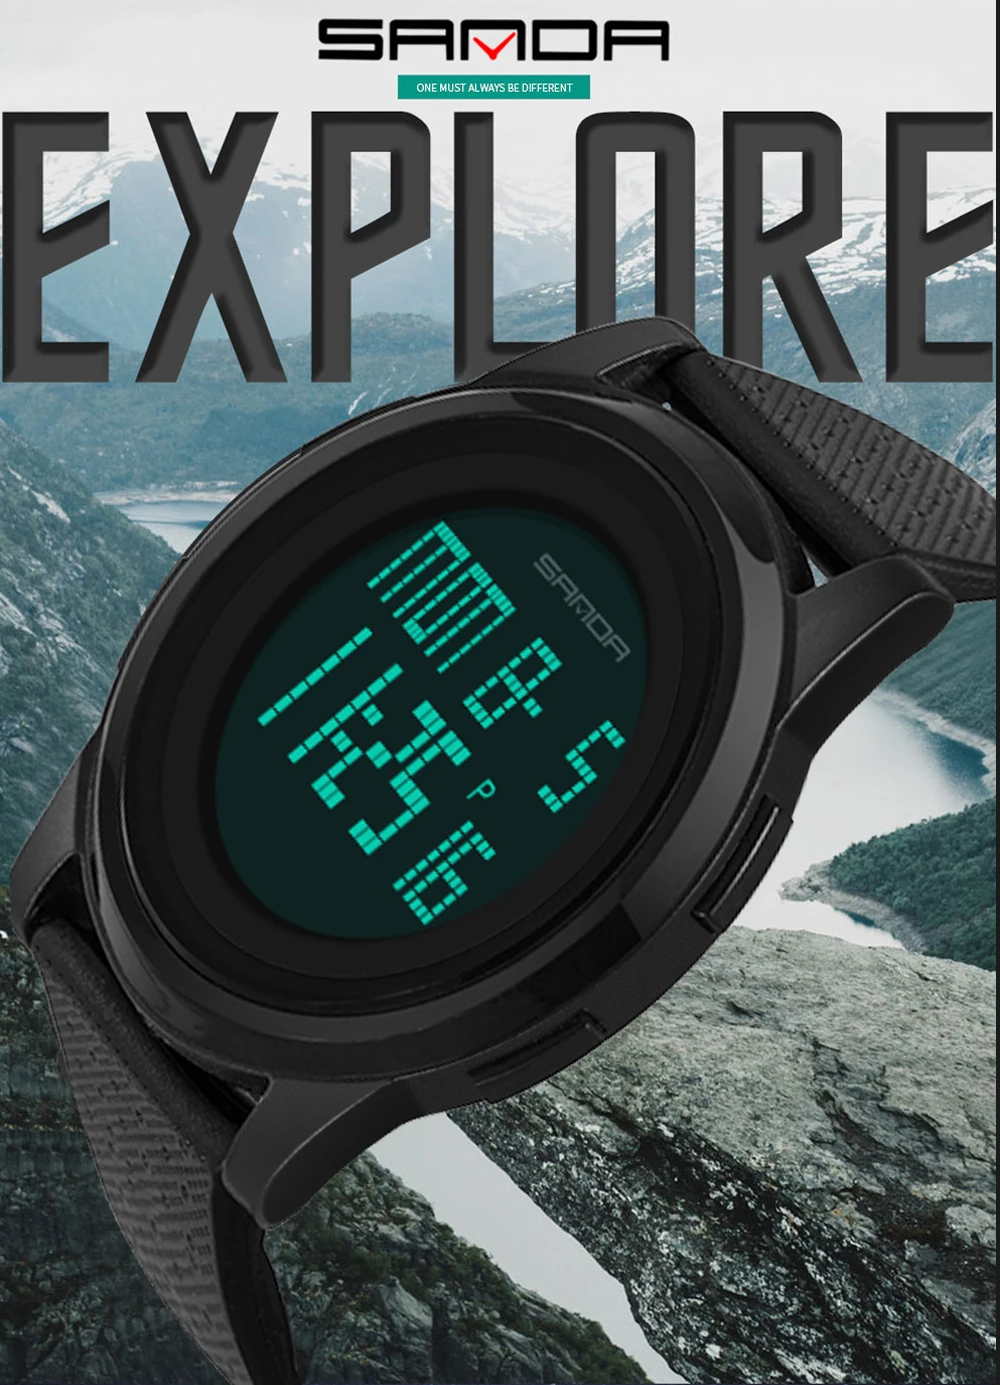 

SANDA Brand 9mm Super Slim Men's Watch Luxury Electronic LED Digital Watches for Man Clock Male Wristwatch Relogio Masculino 337